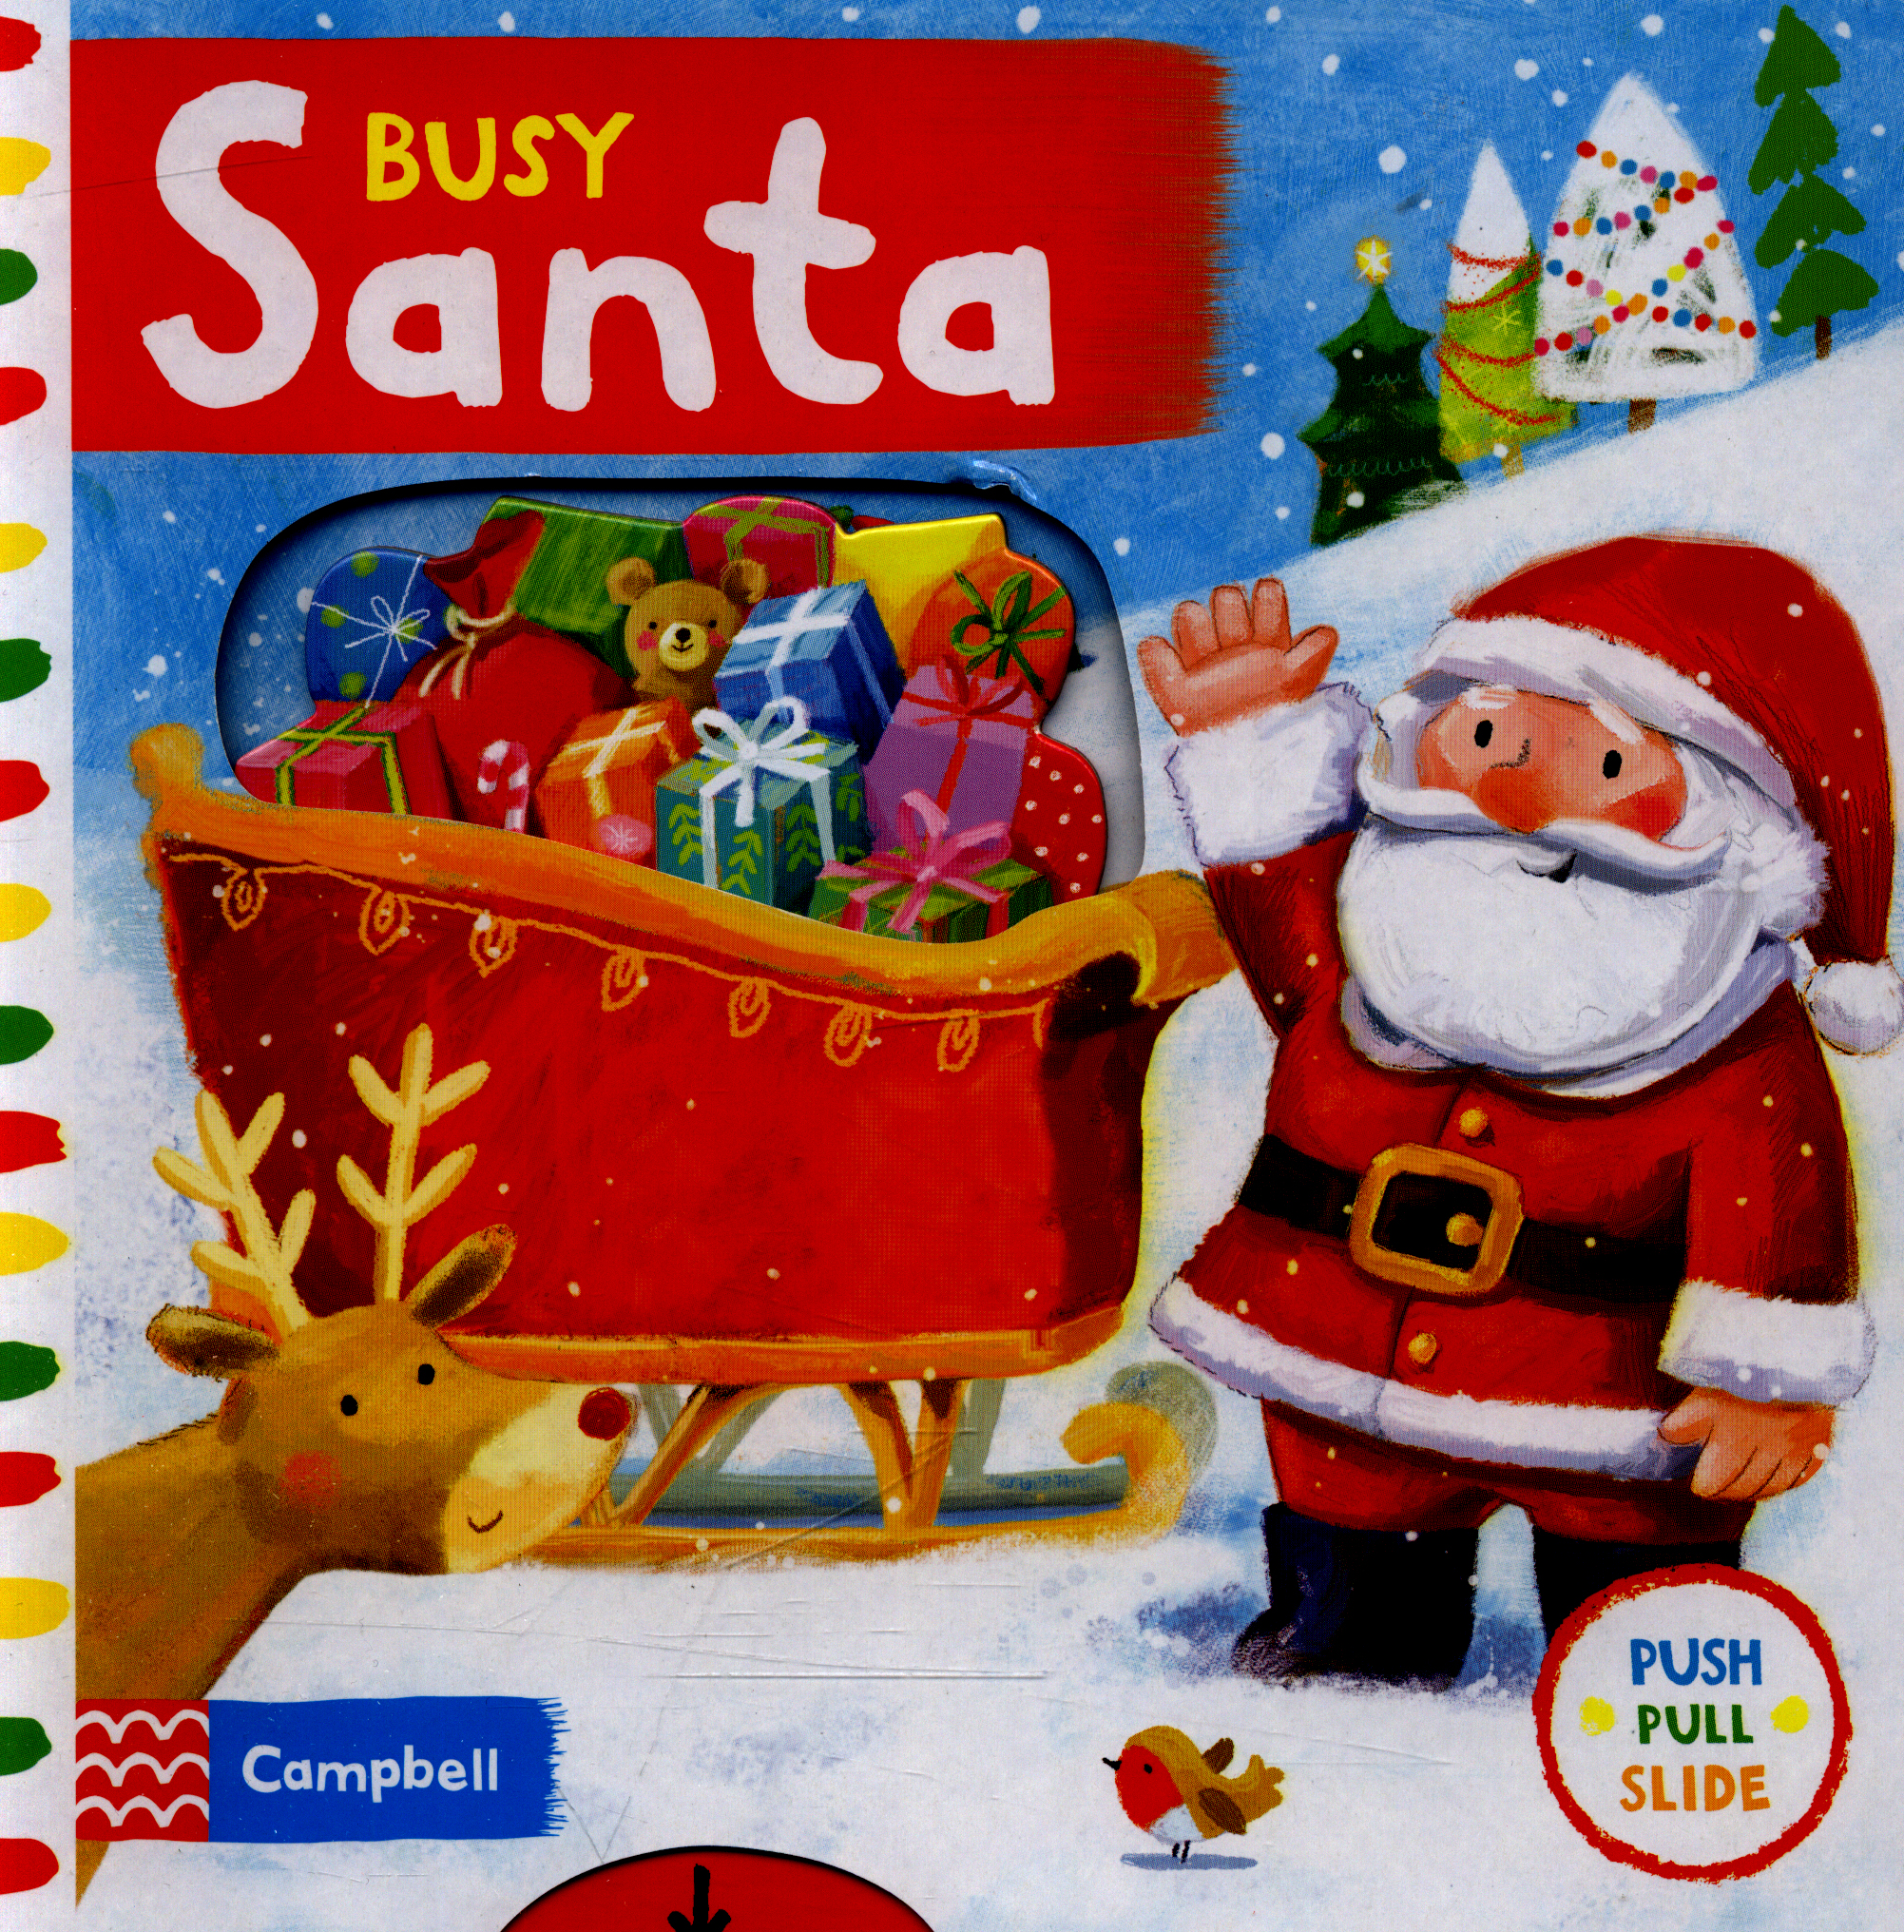 Busy Santa